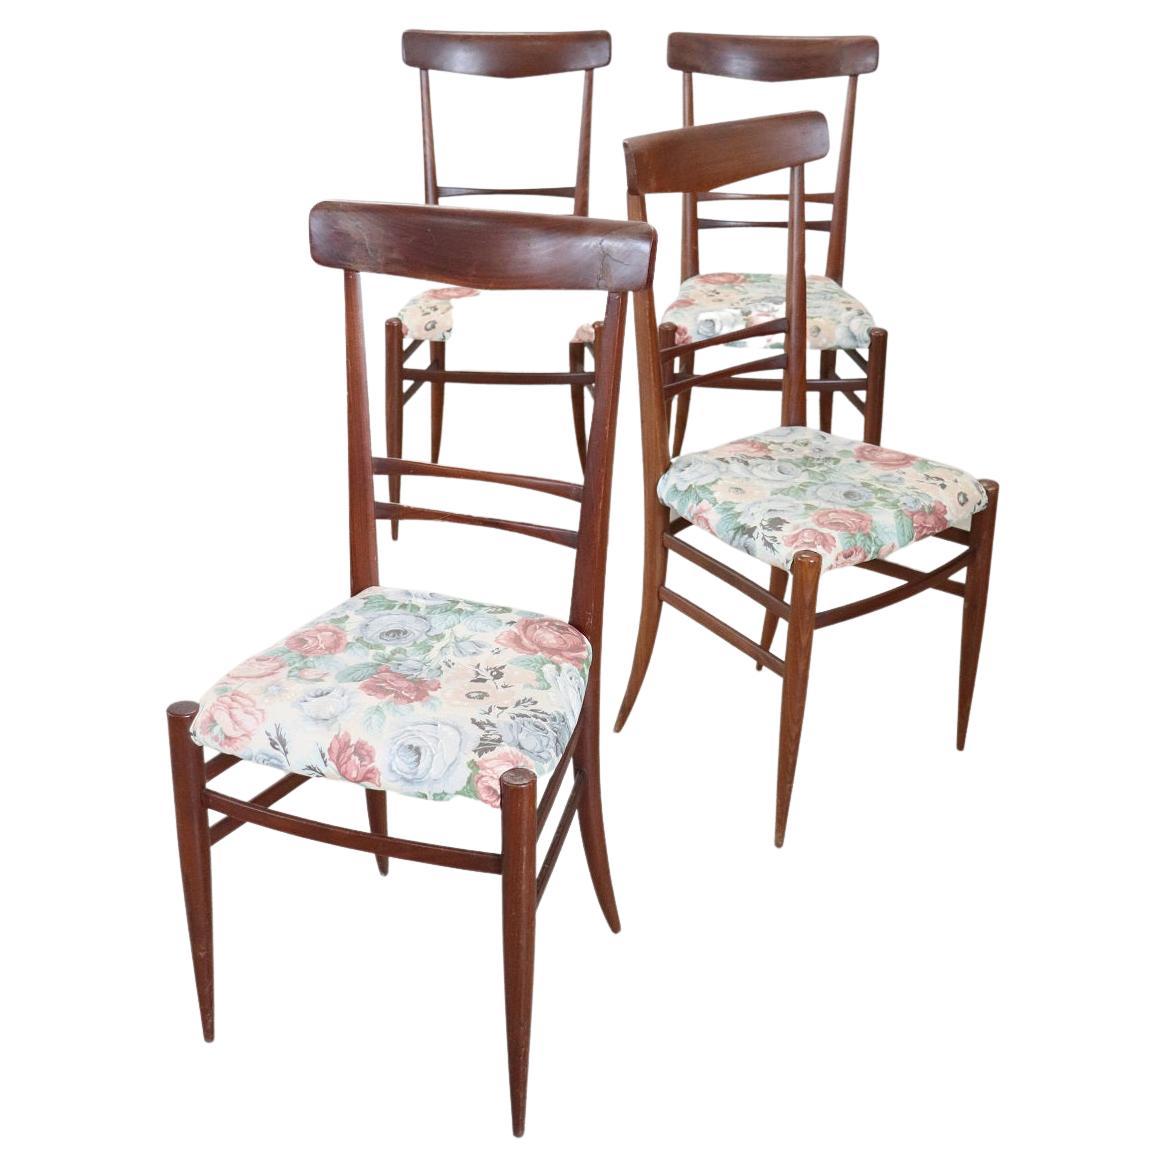 20th Century Italian Design Set of Four Chairs in Teak, Ico Parisi 1950s For Sale